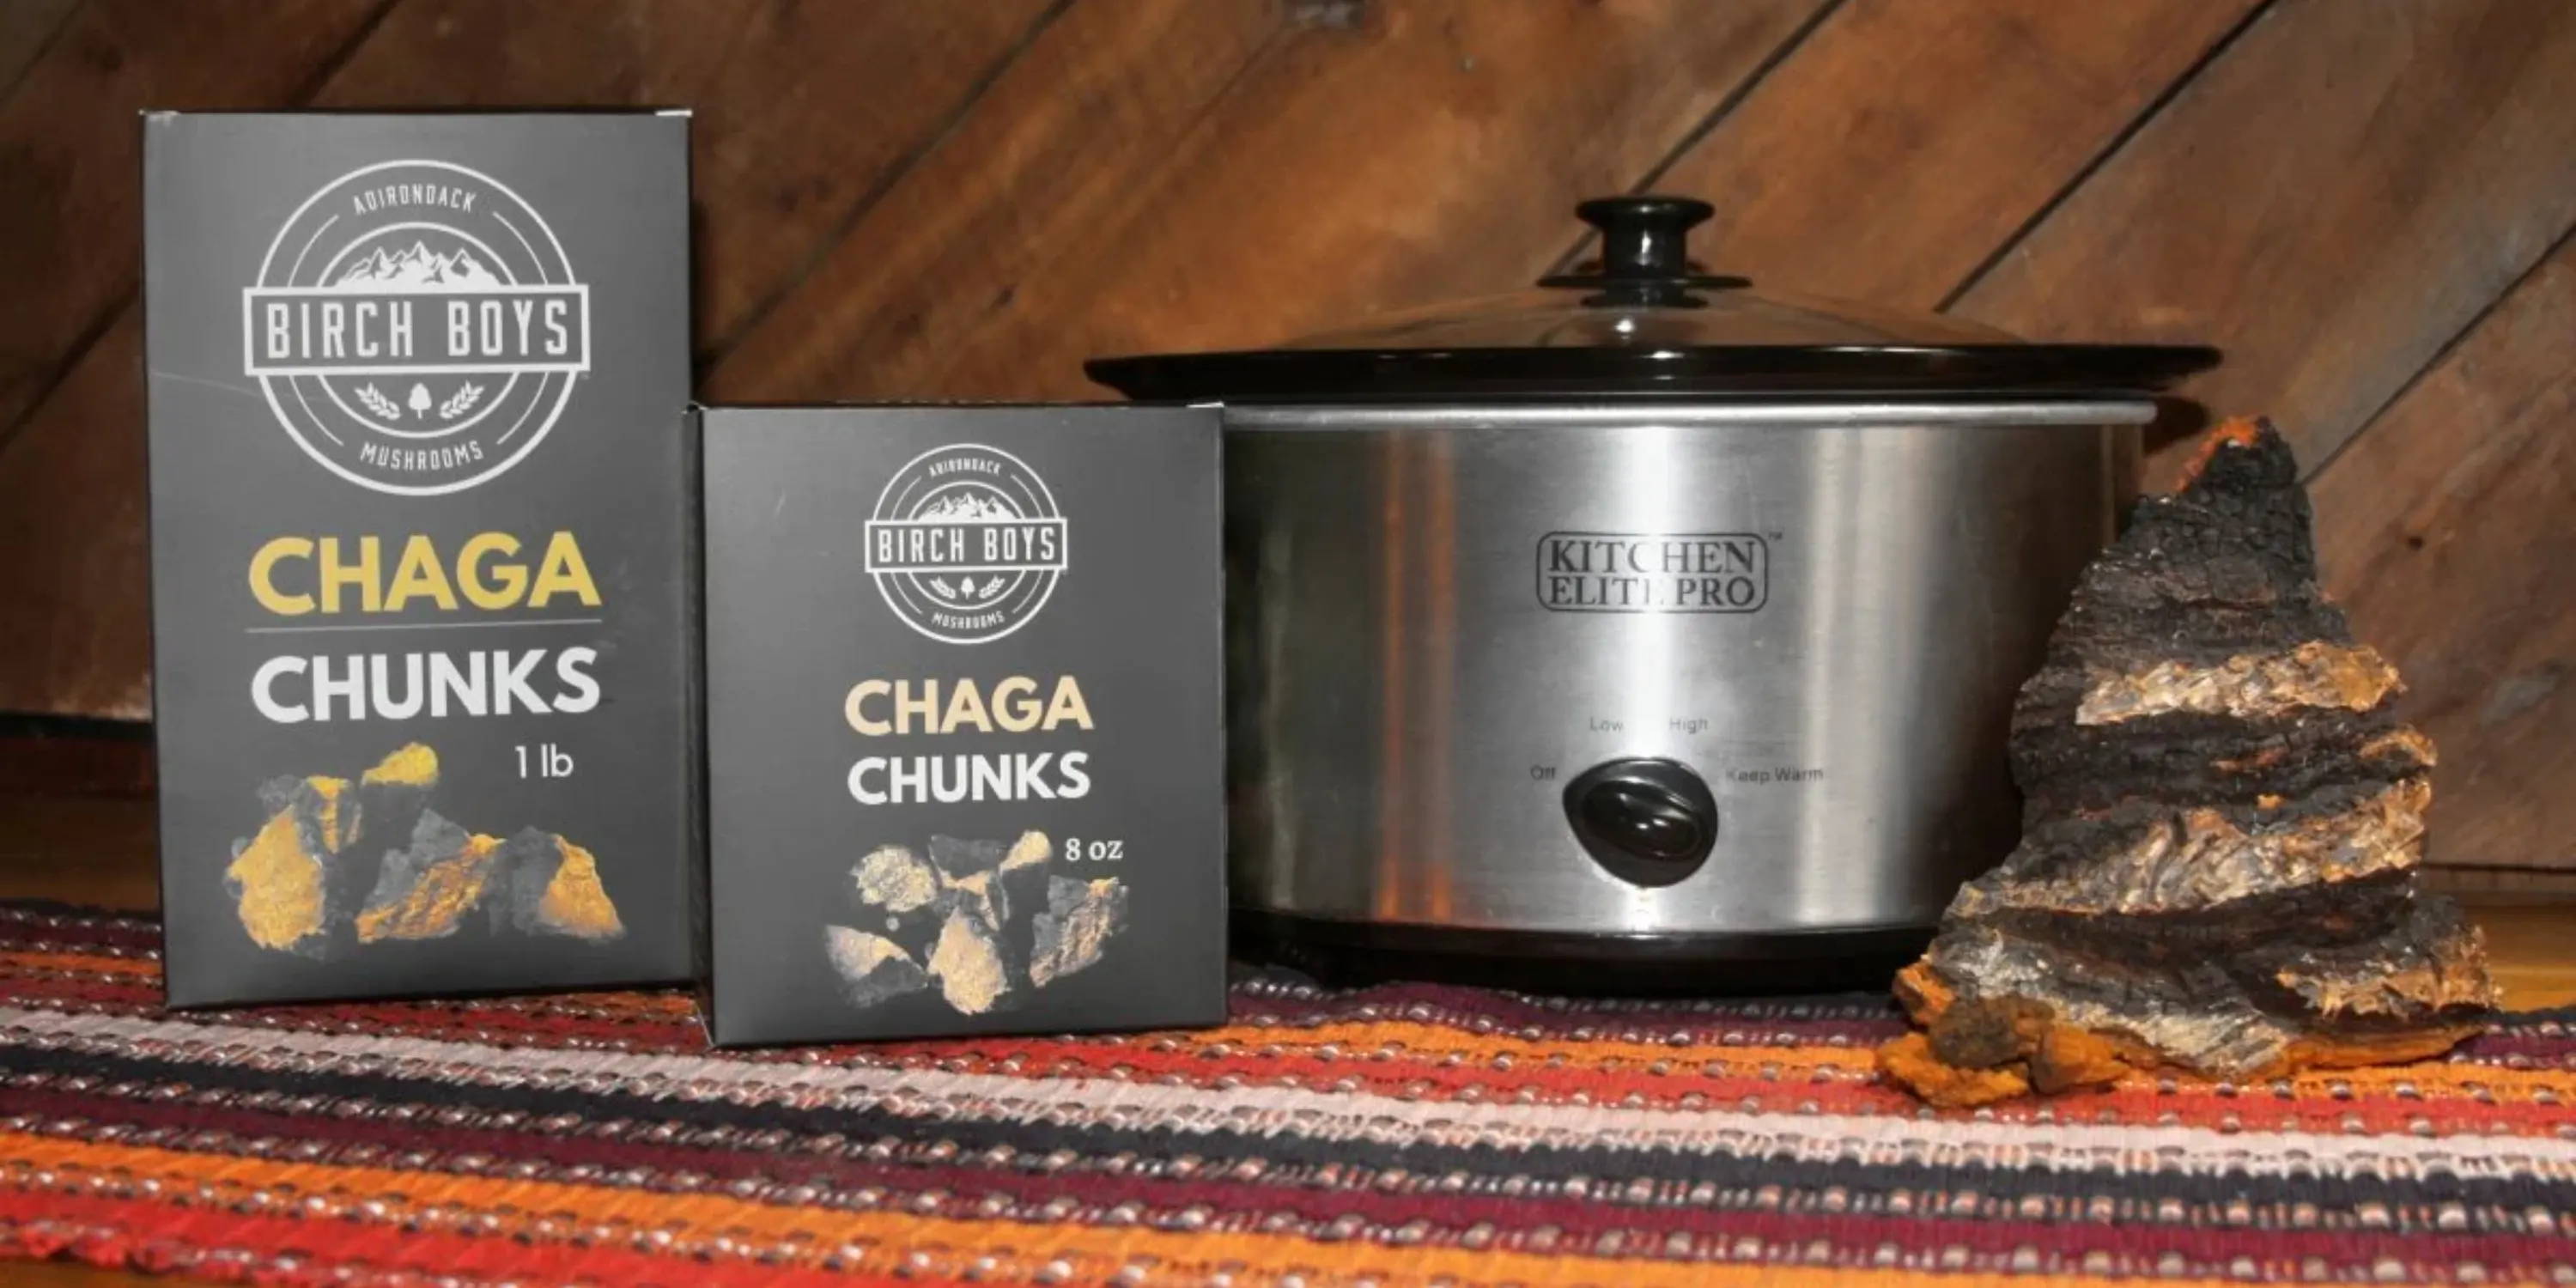 Birch Boys Chaga Chunks with a conk of wild organic chaga and a crock pot slowcooker